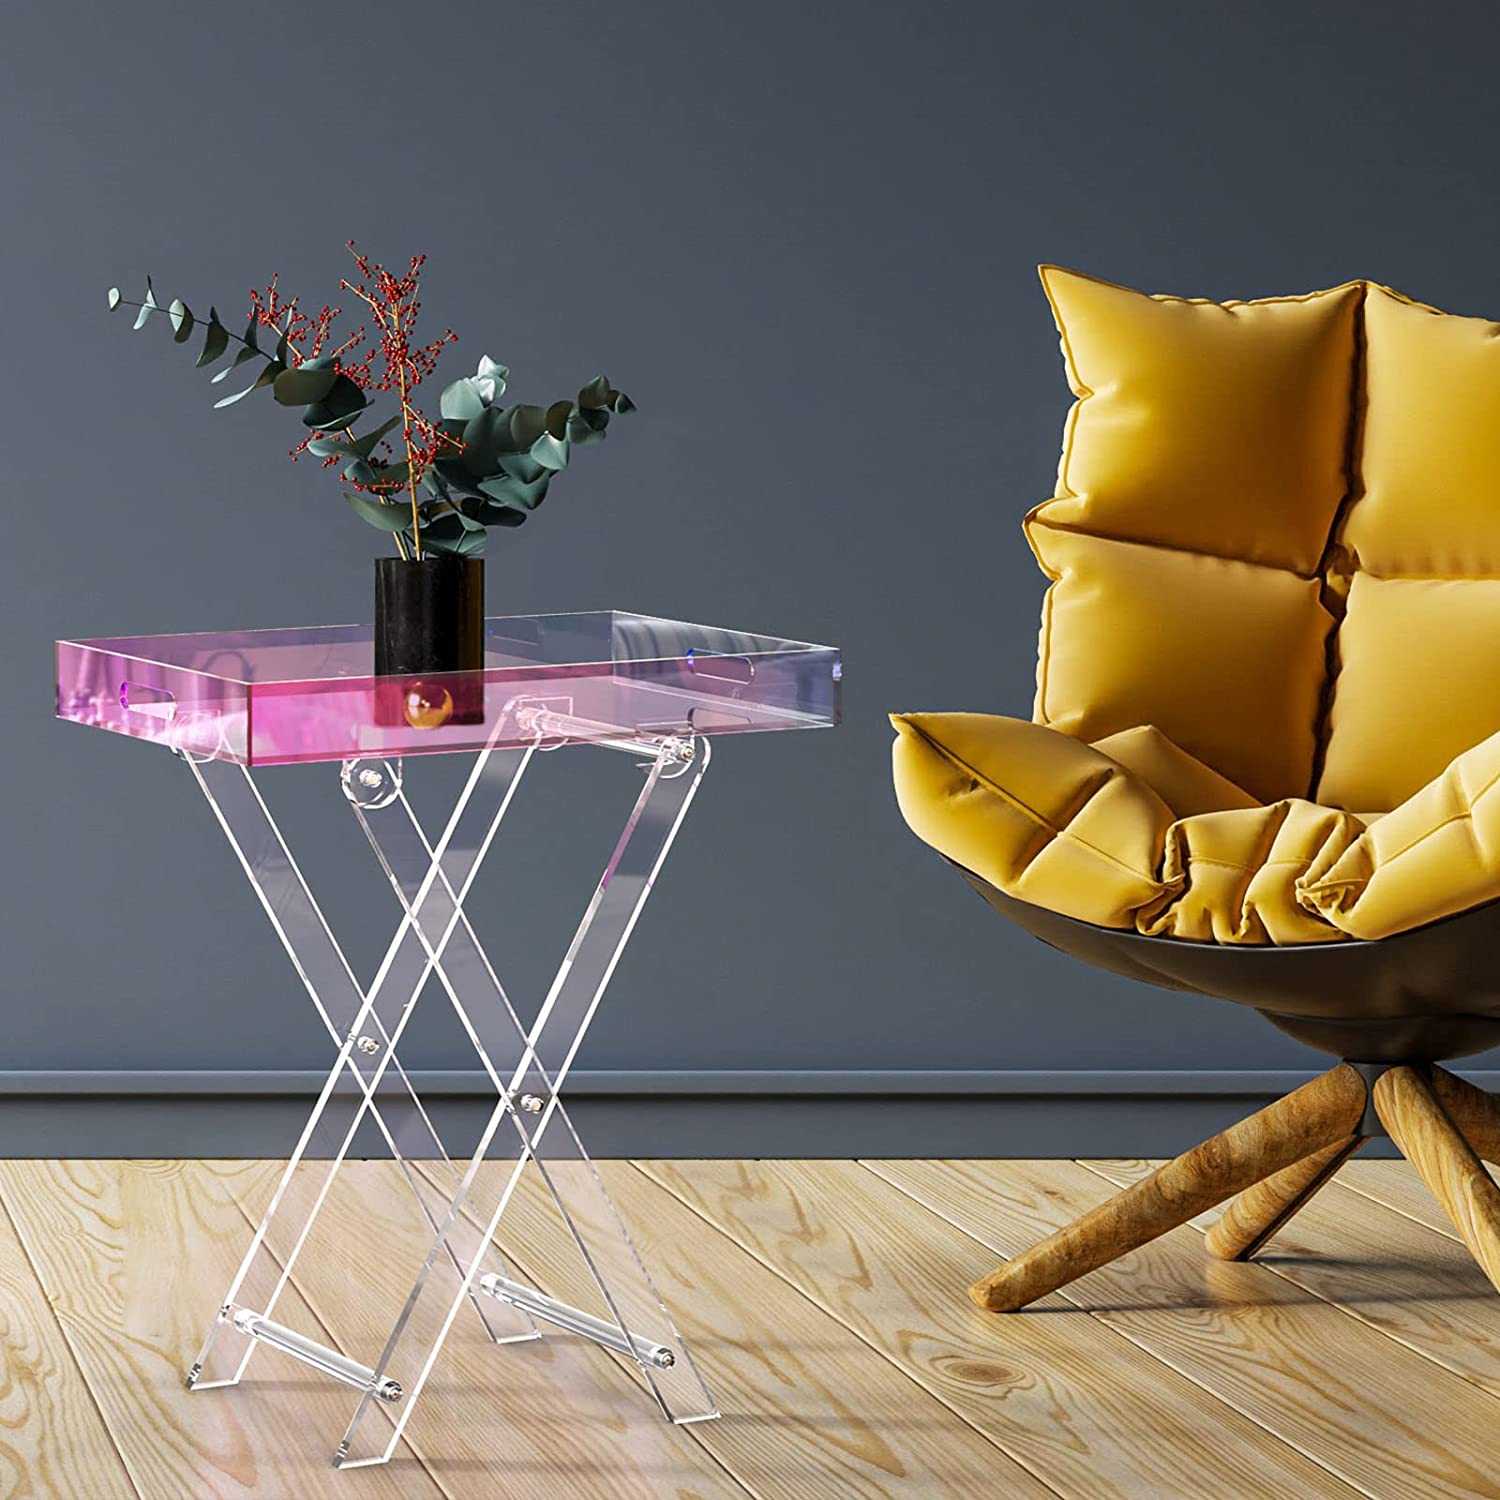 acrylic iridescent table as decoration